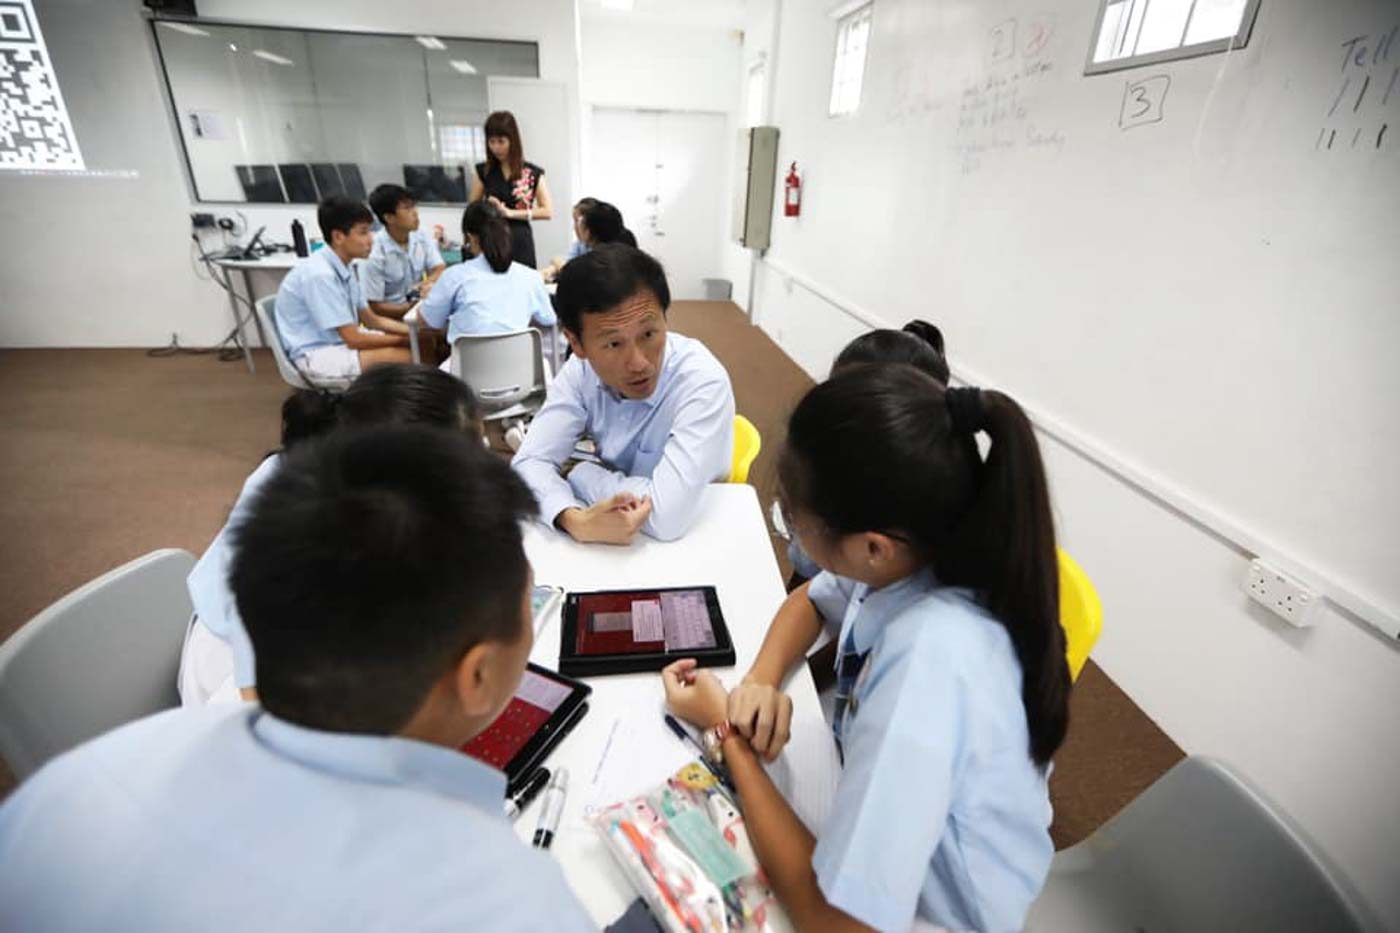 Why Singapore reopened schools despite coronavirus: They used science